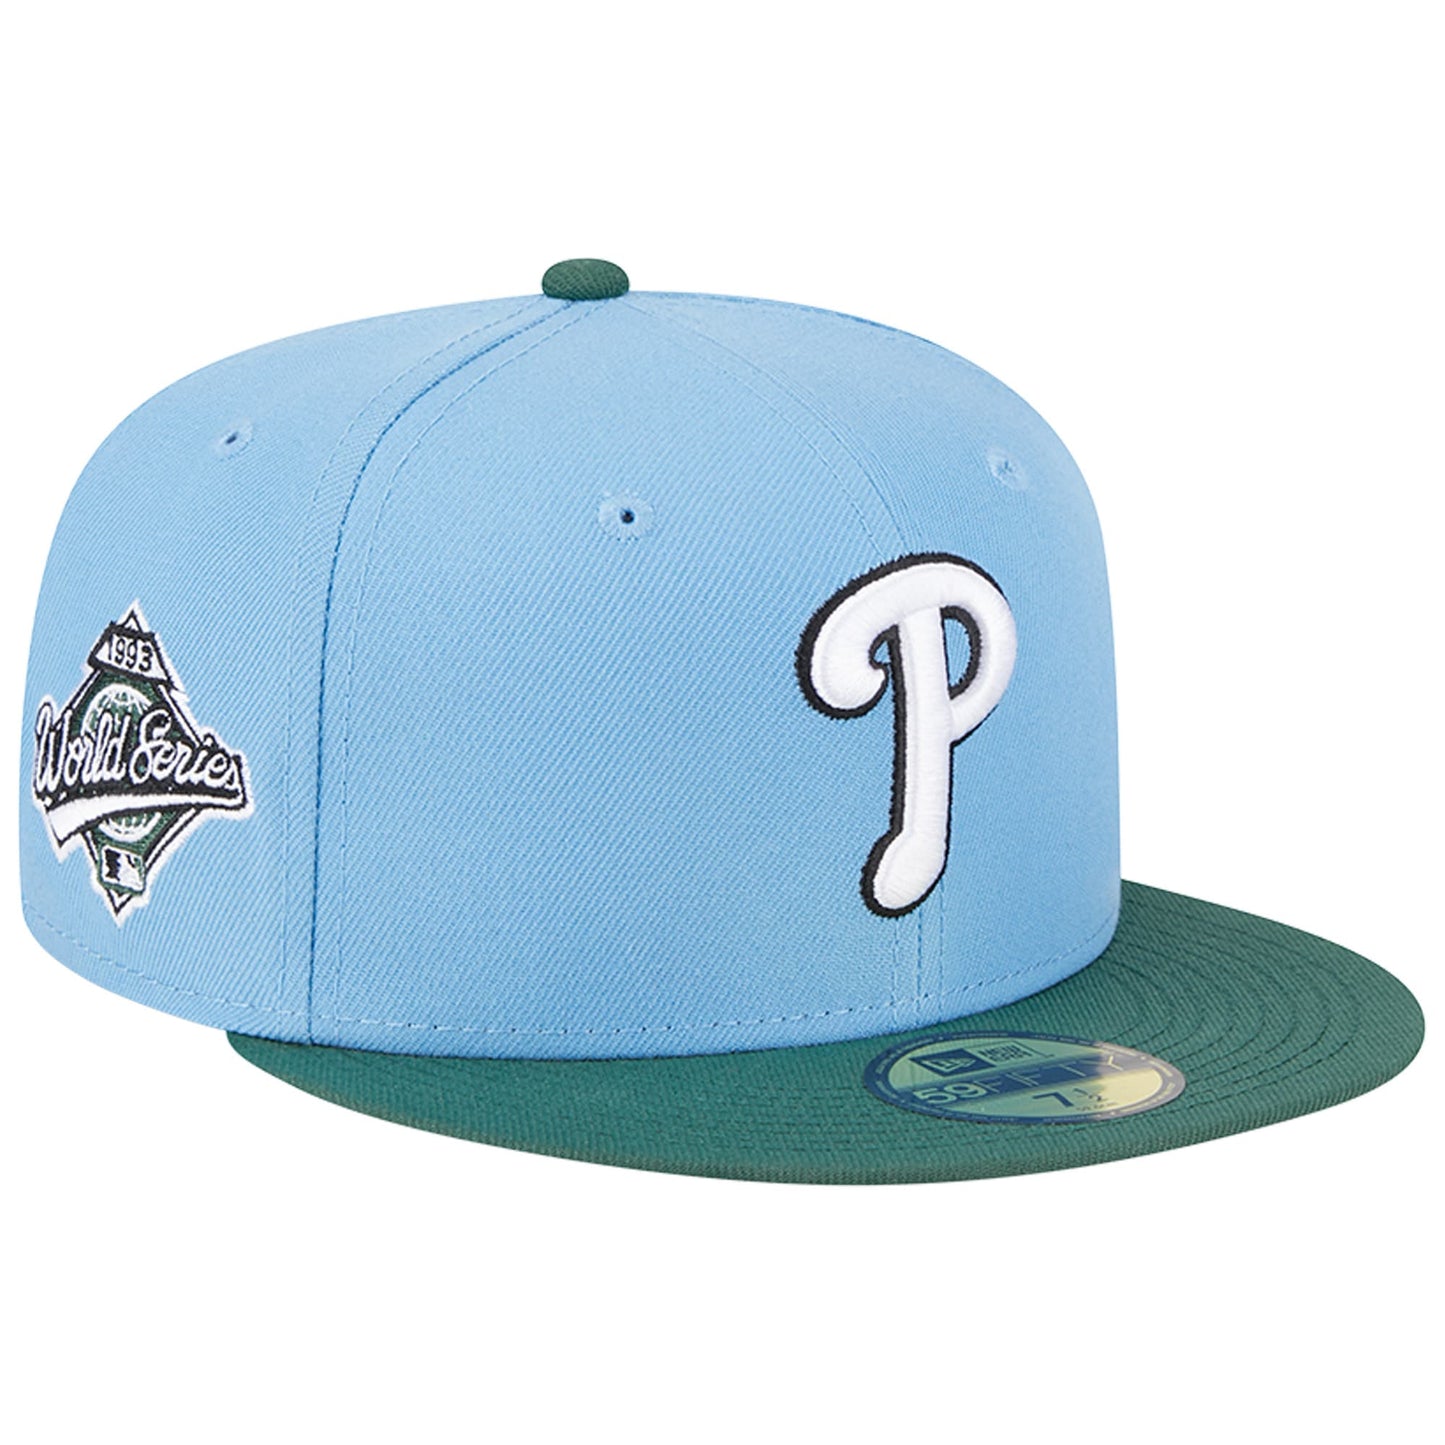 Philadelphia Phillies New Era 1993 World Series 59FIFTY Fitted Hat - Sky Blue/Cilantro